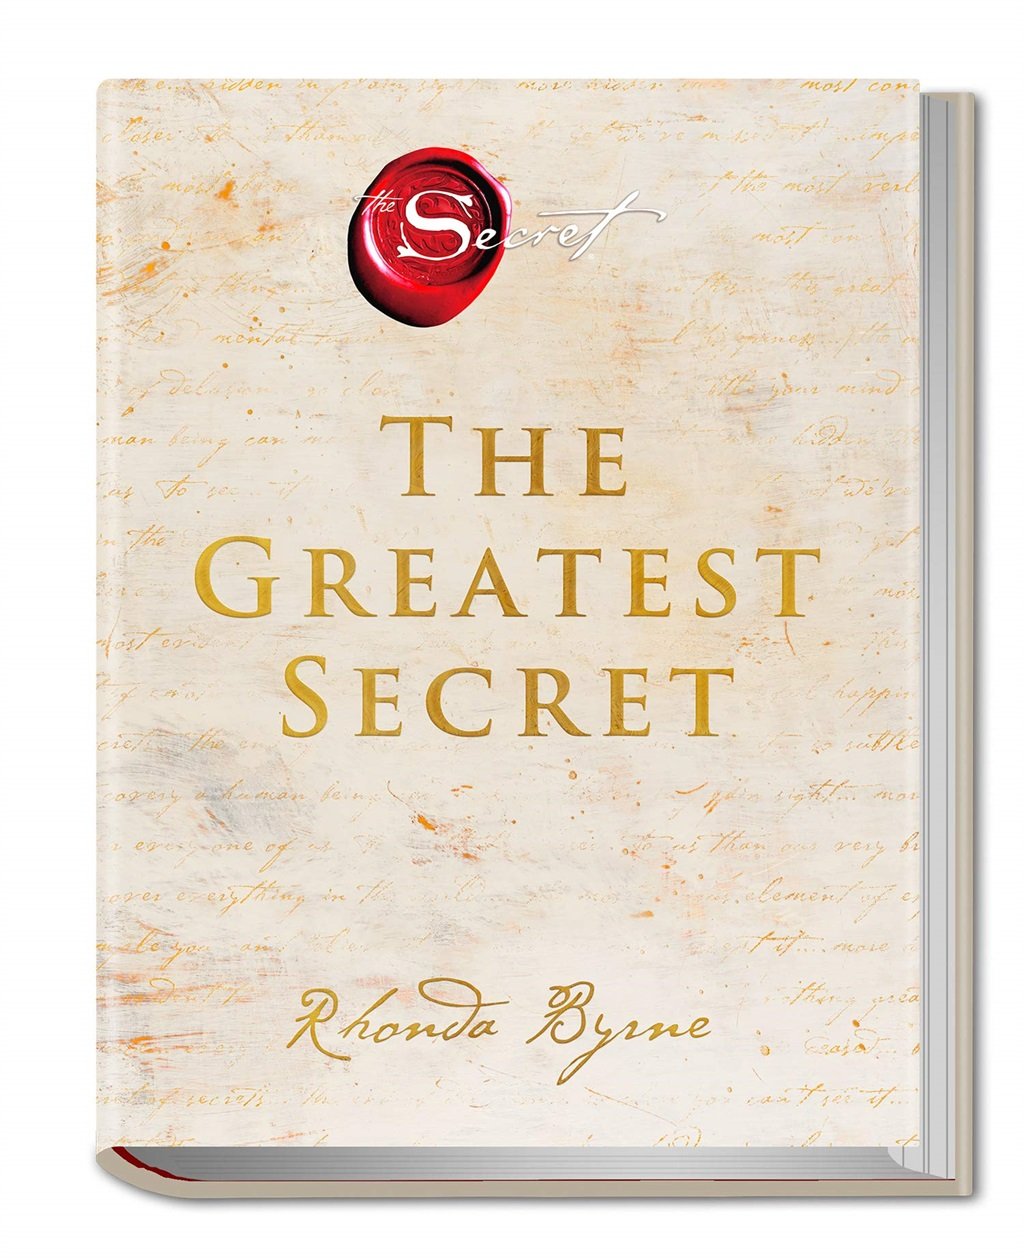 The greatest secret by Rhonda Byrne (Photo: Thorso